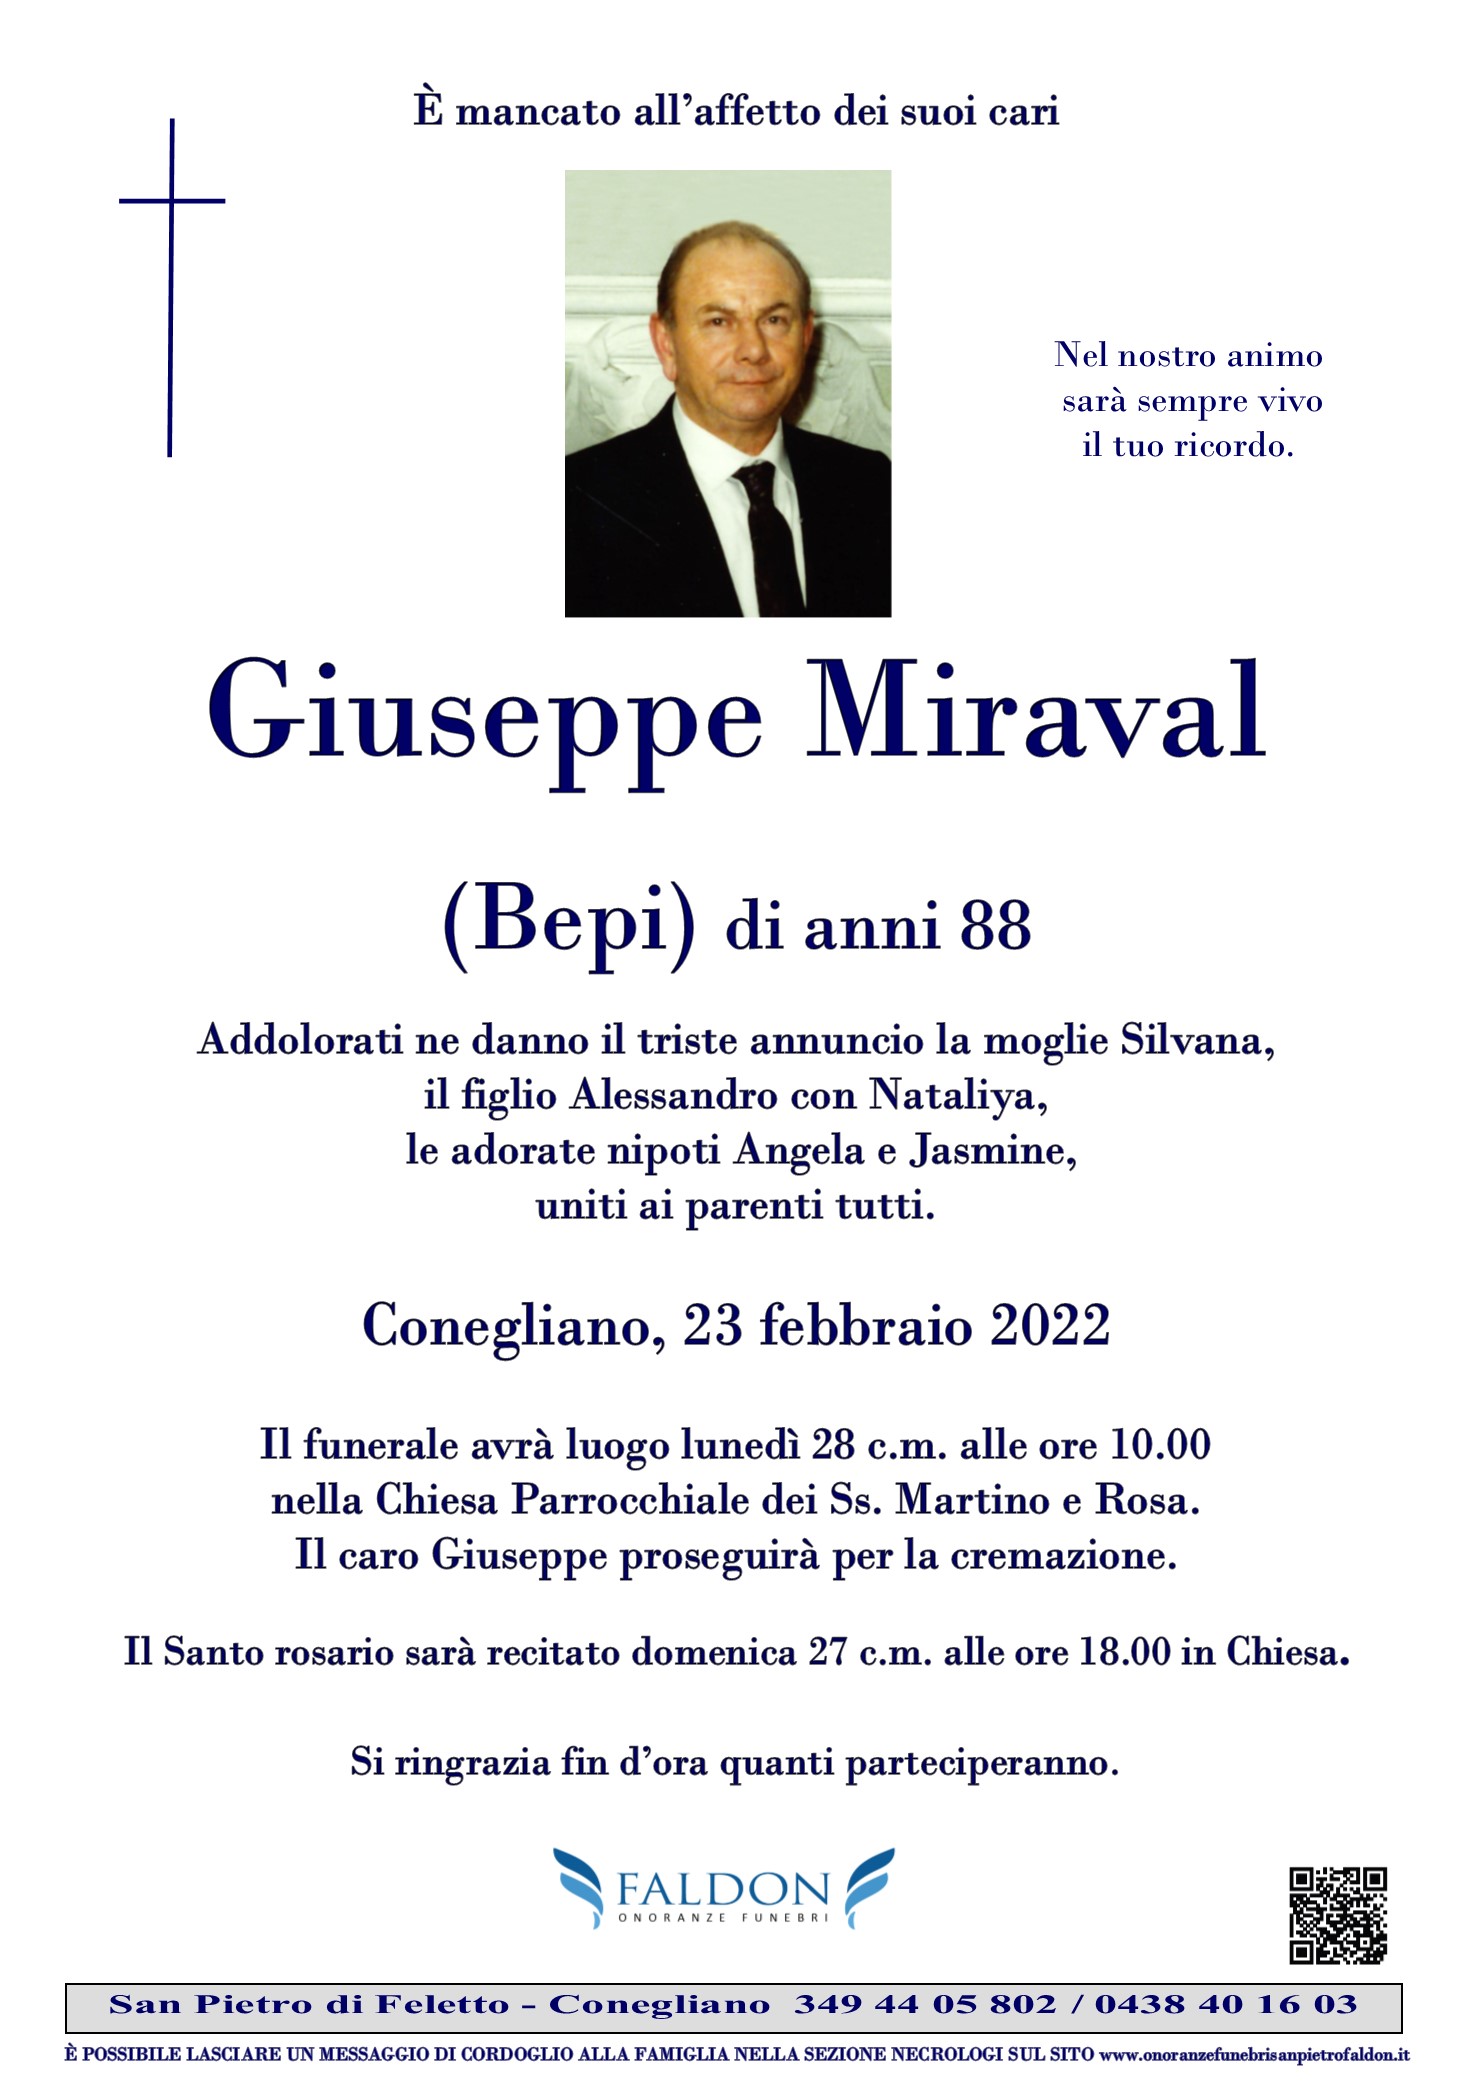 Giuseppe Miraval